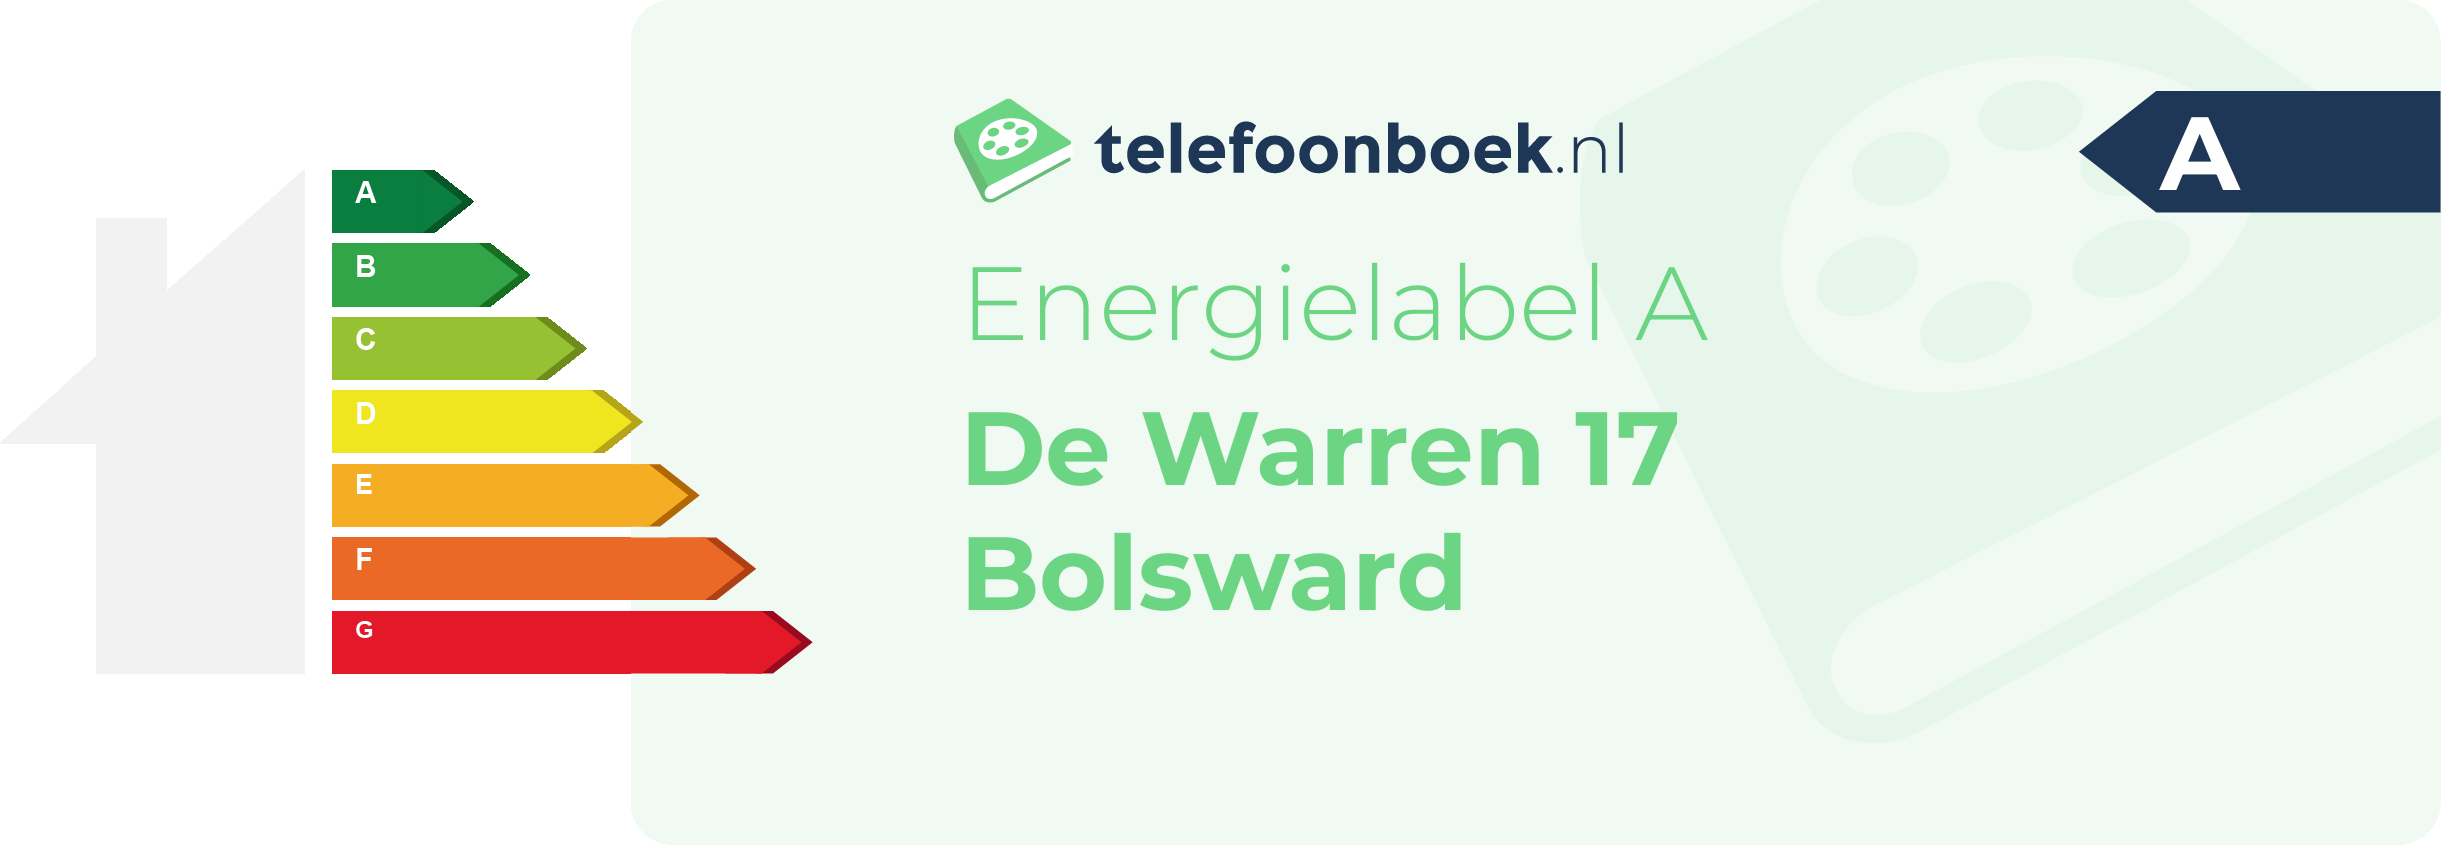 Energielabel De Warren 17 Bolsward